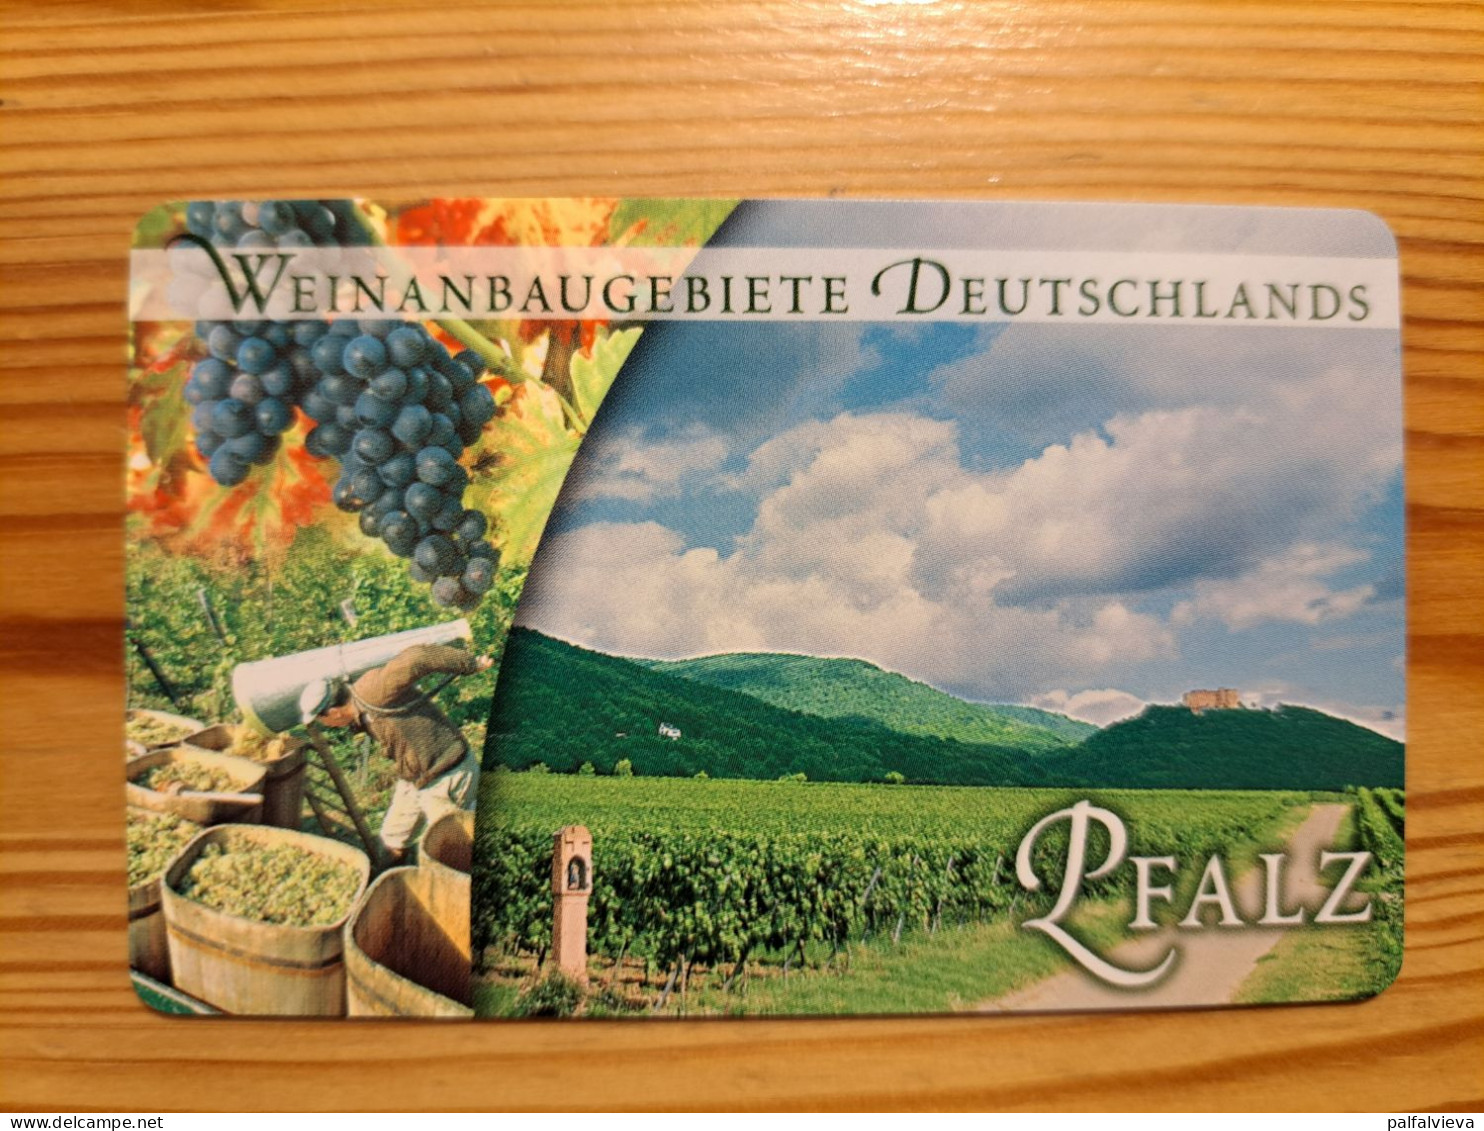 Phonecard Germany A 05 02.02. Wine, Pfalz 6.000 Ex. - A + AD-Series : Werbekarten Der Dt. Telekom AG